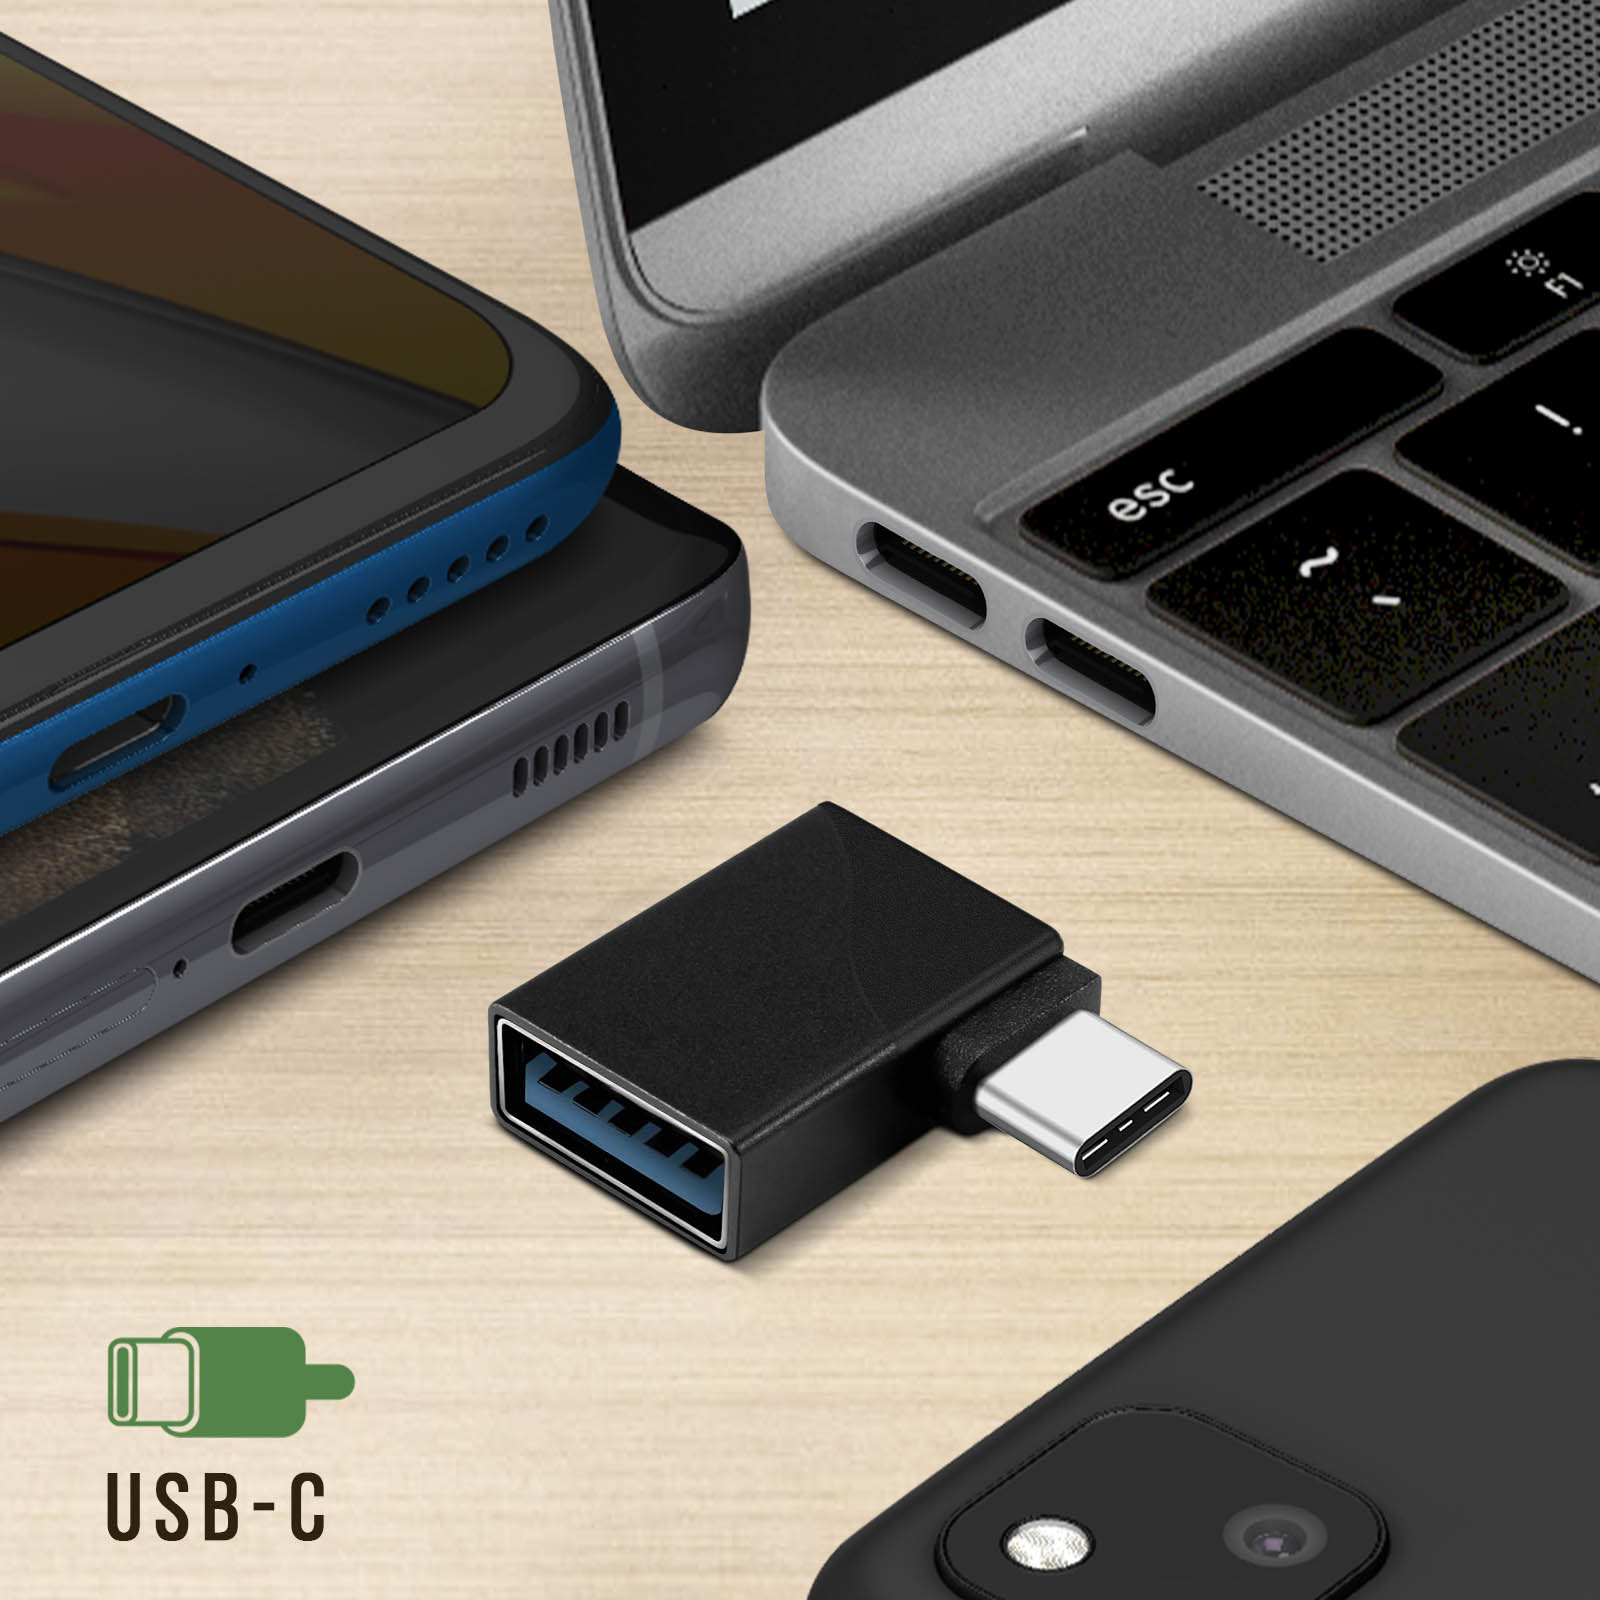 Adaptateur USB-A 3.0 vers USB-C Femelle - CCGB60925GY